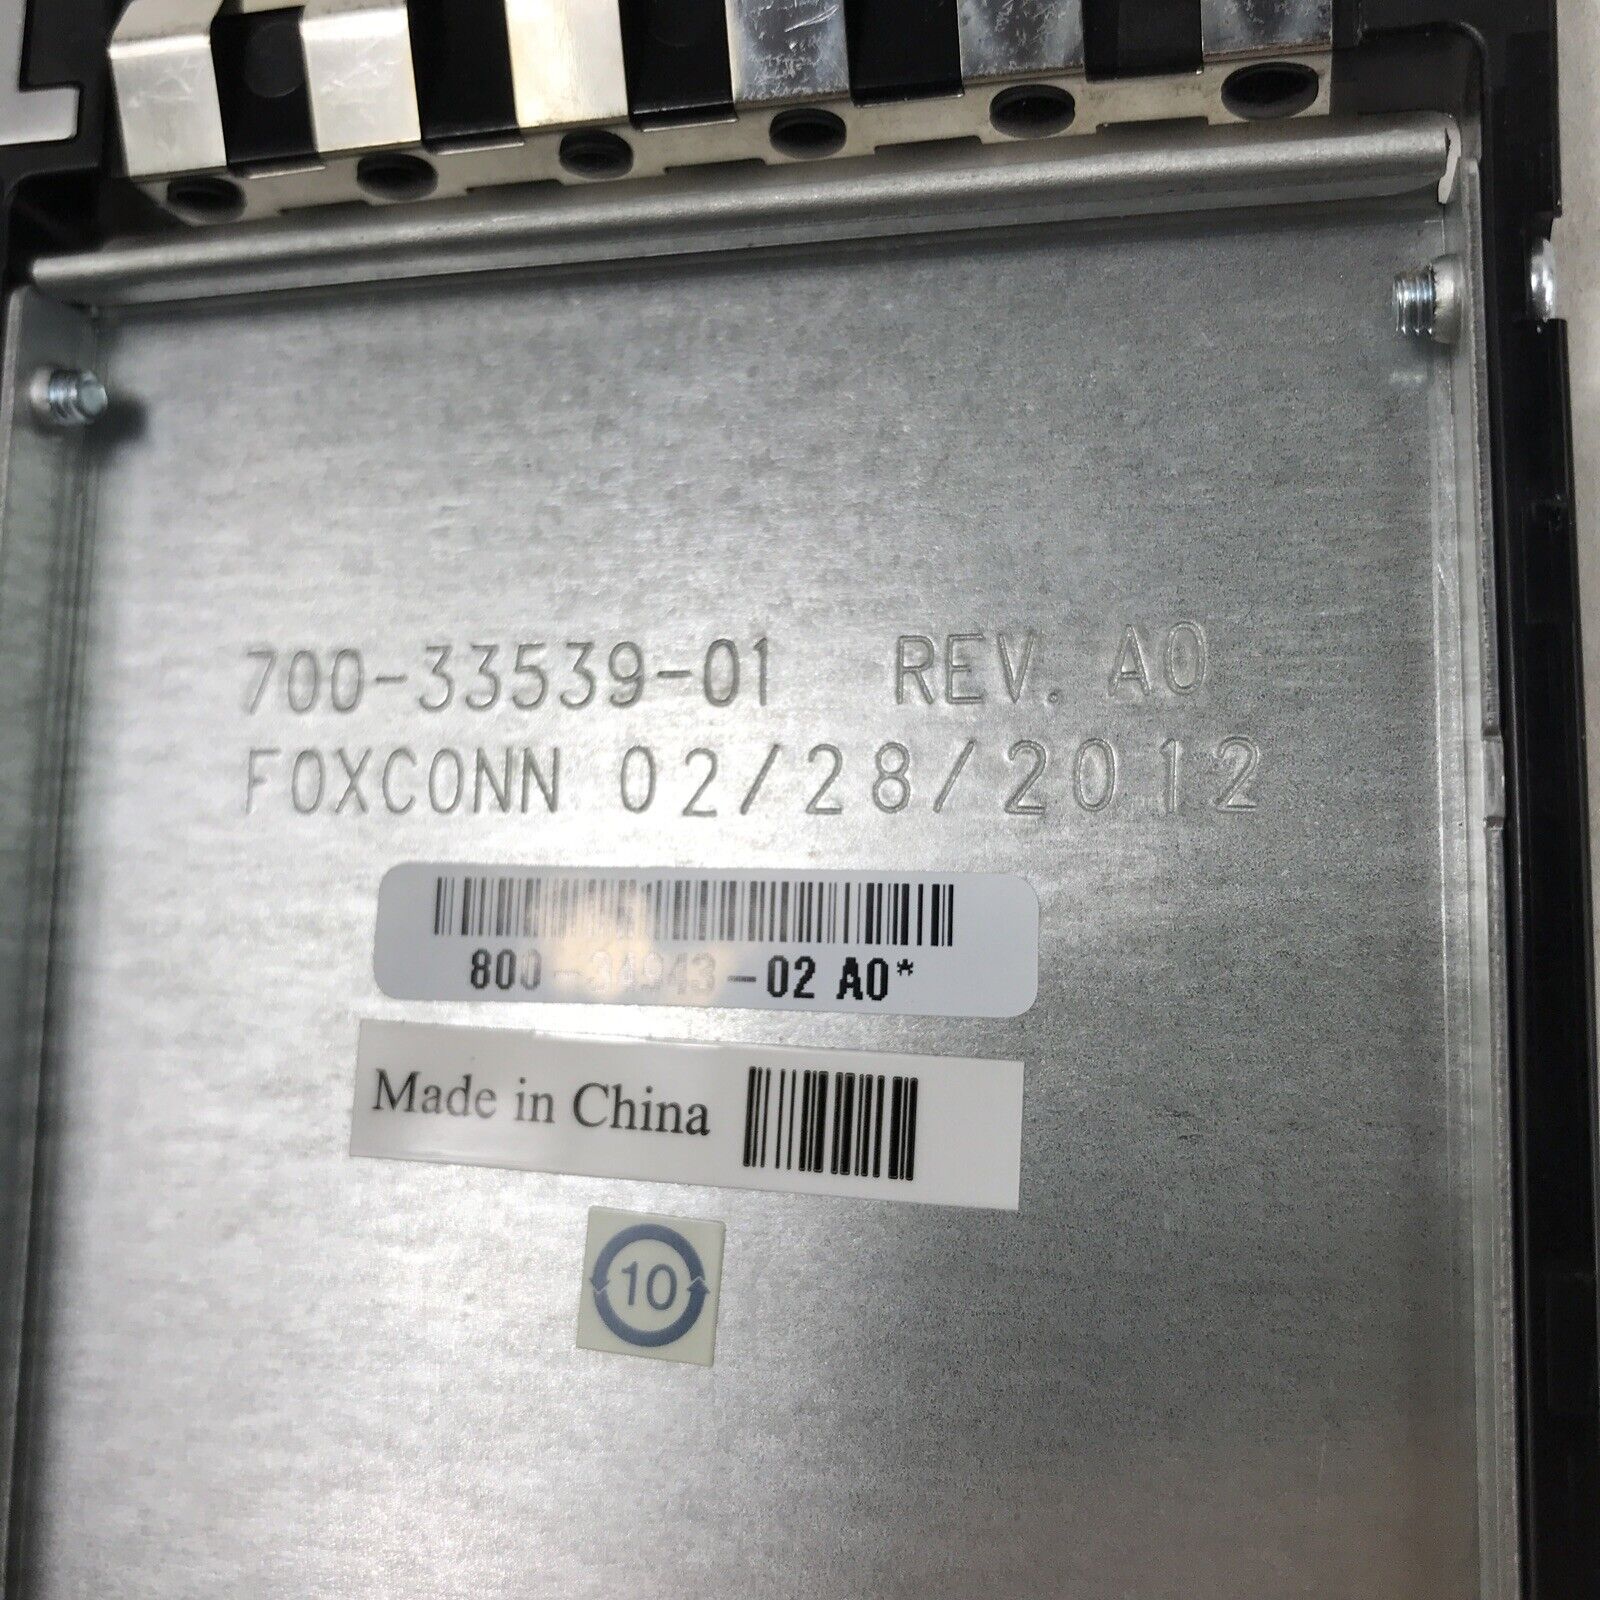 (Lot of 2) Foxconn 700-33539-01 Hard Drive Caddies